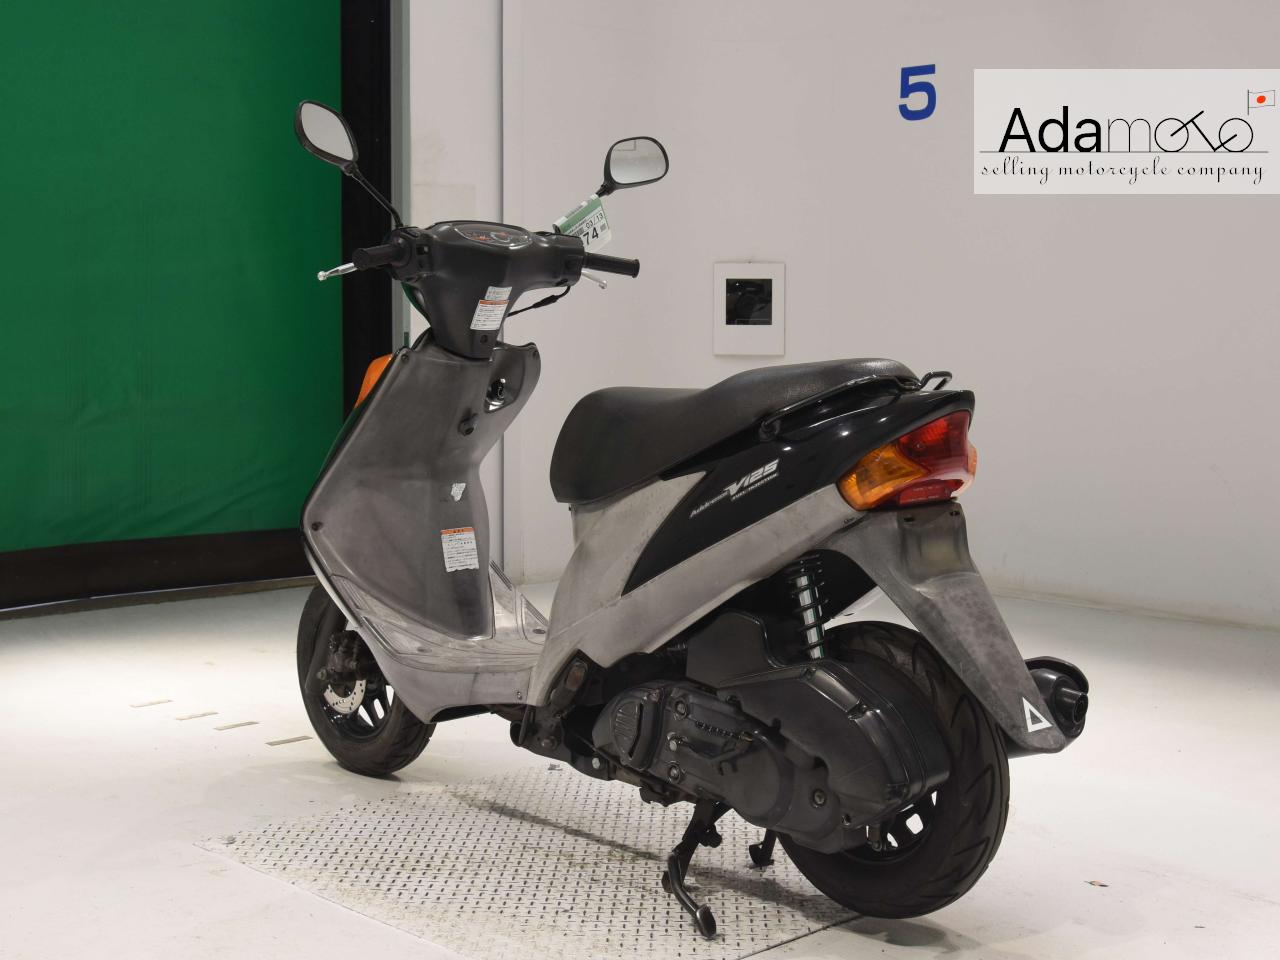 Suzuki ADDRESS V125 - Adamoto - Motorcycles from Japan